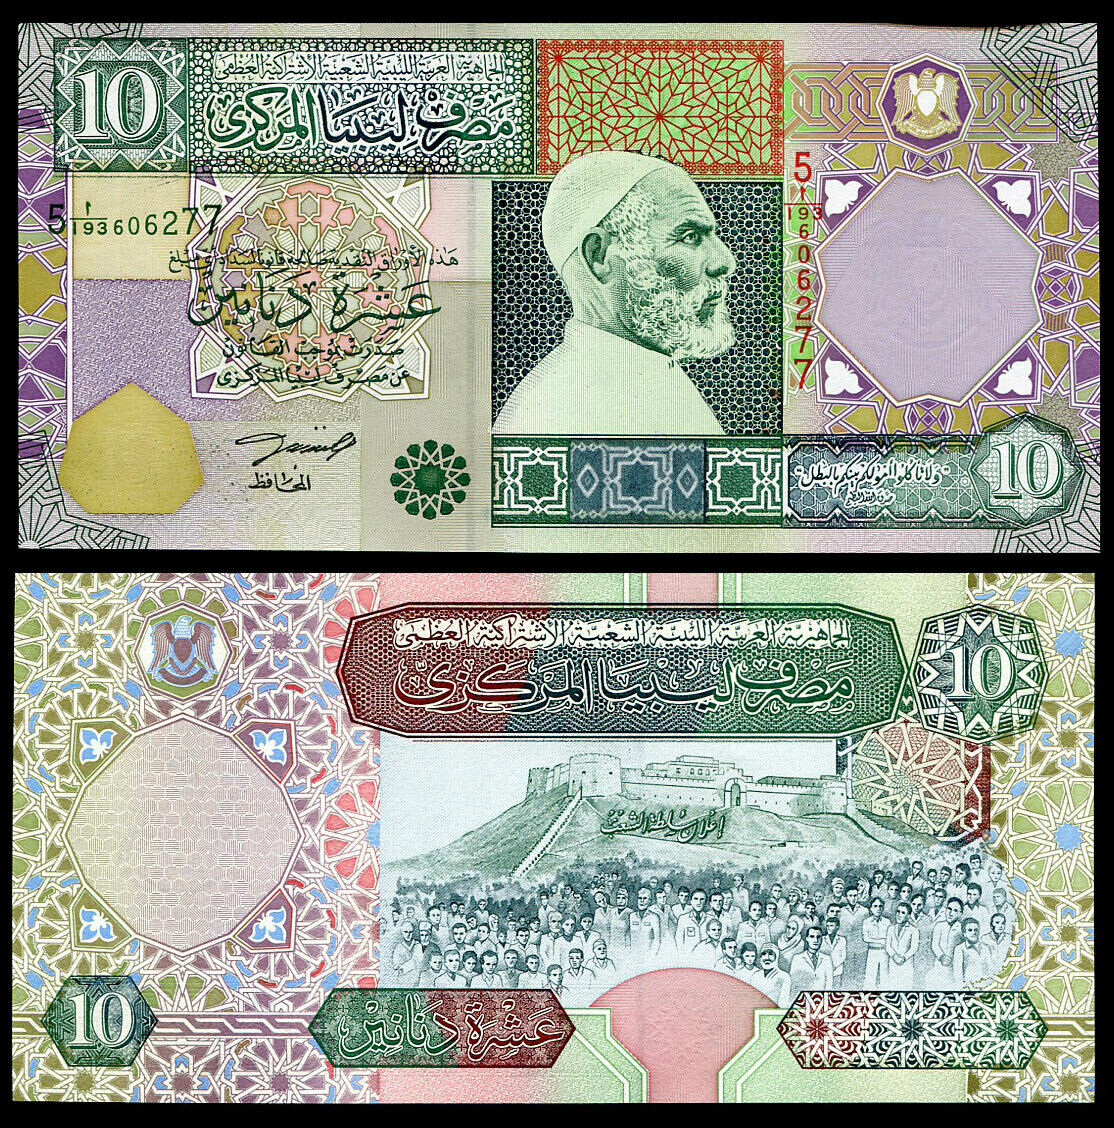 LIBYA 10 DINARS ND 2002 P 66 aUNC